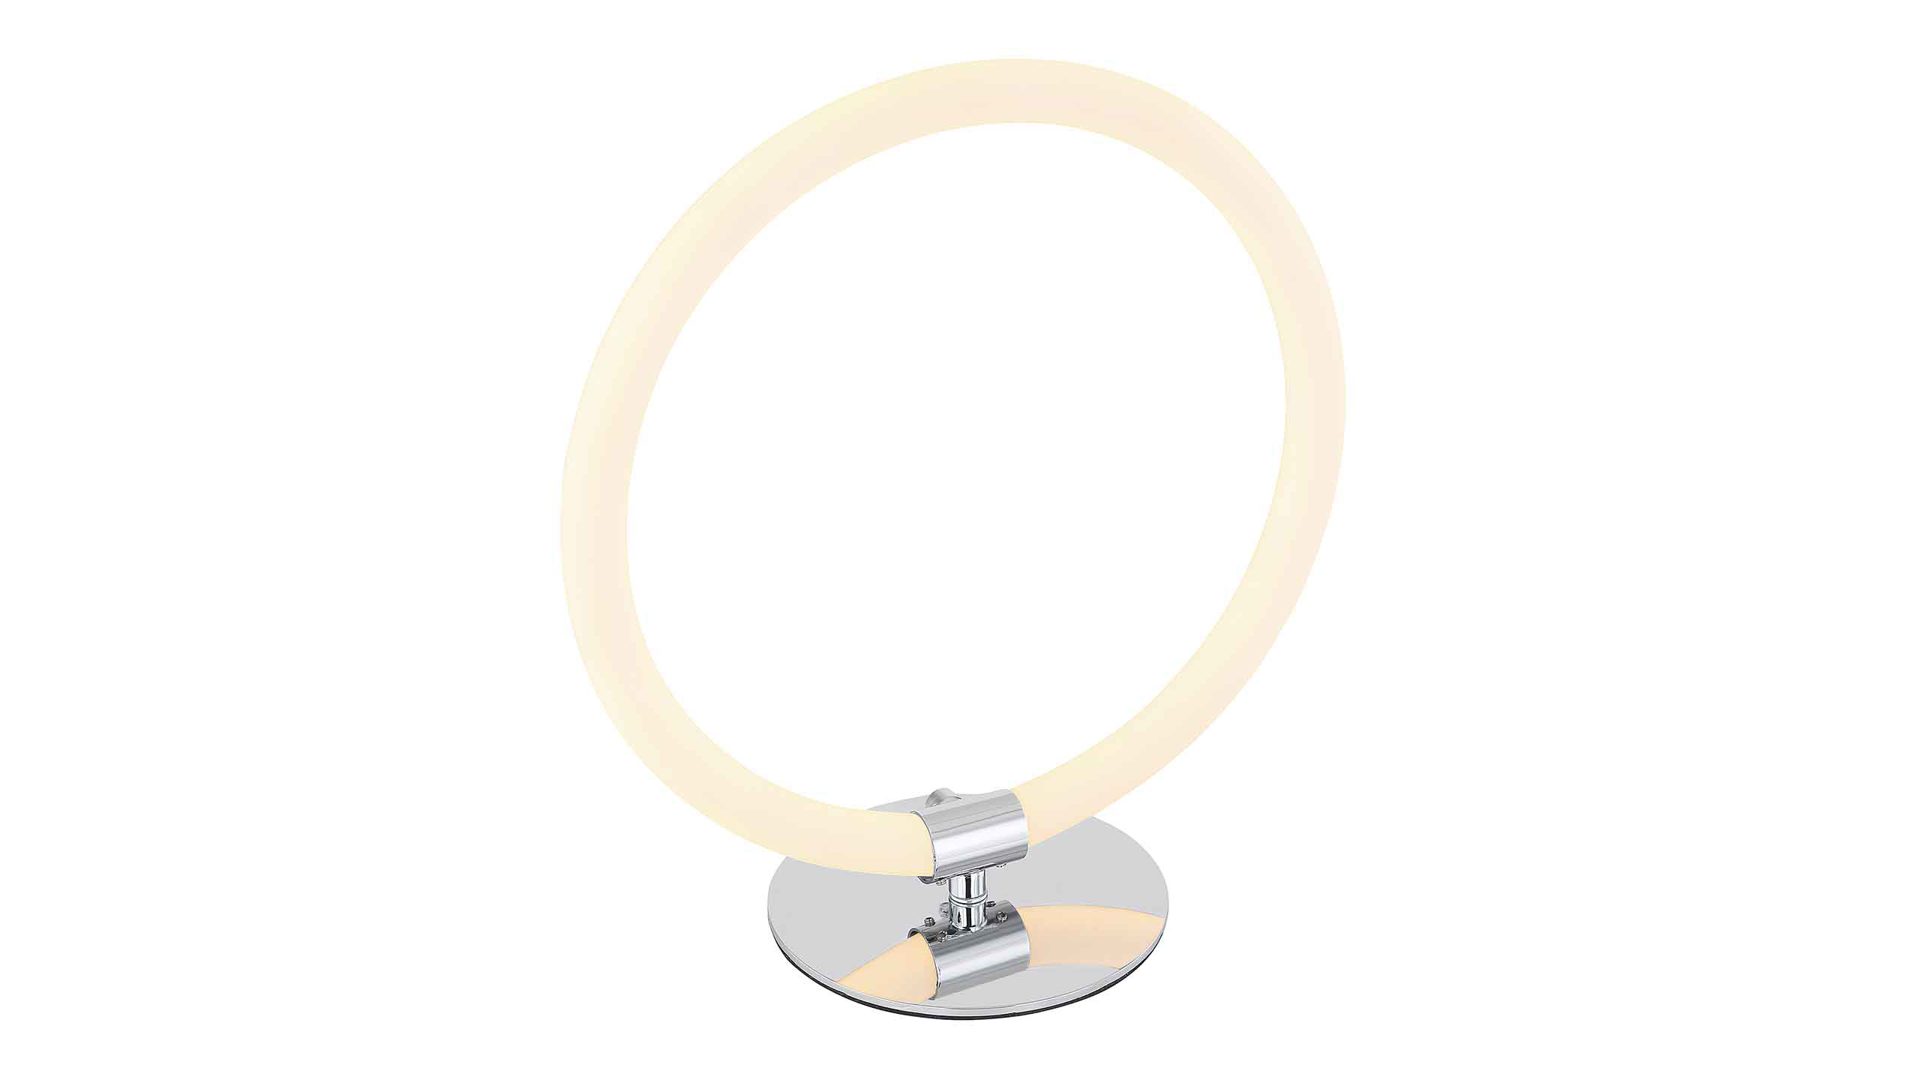 Tischleuchte Globo lighting aus Kunststoff Metall in Chrom GLOBO Tischleuchte Epi Metall chrom - Durchmesser ca. 30 cm